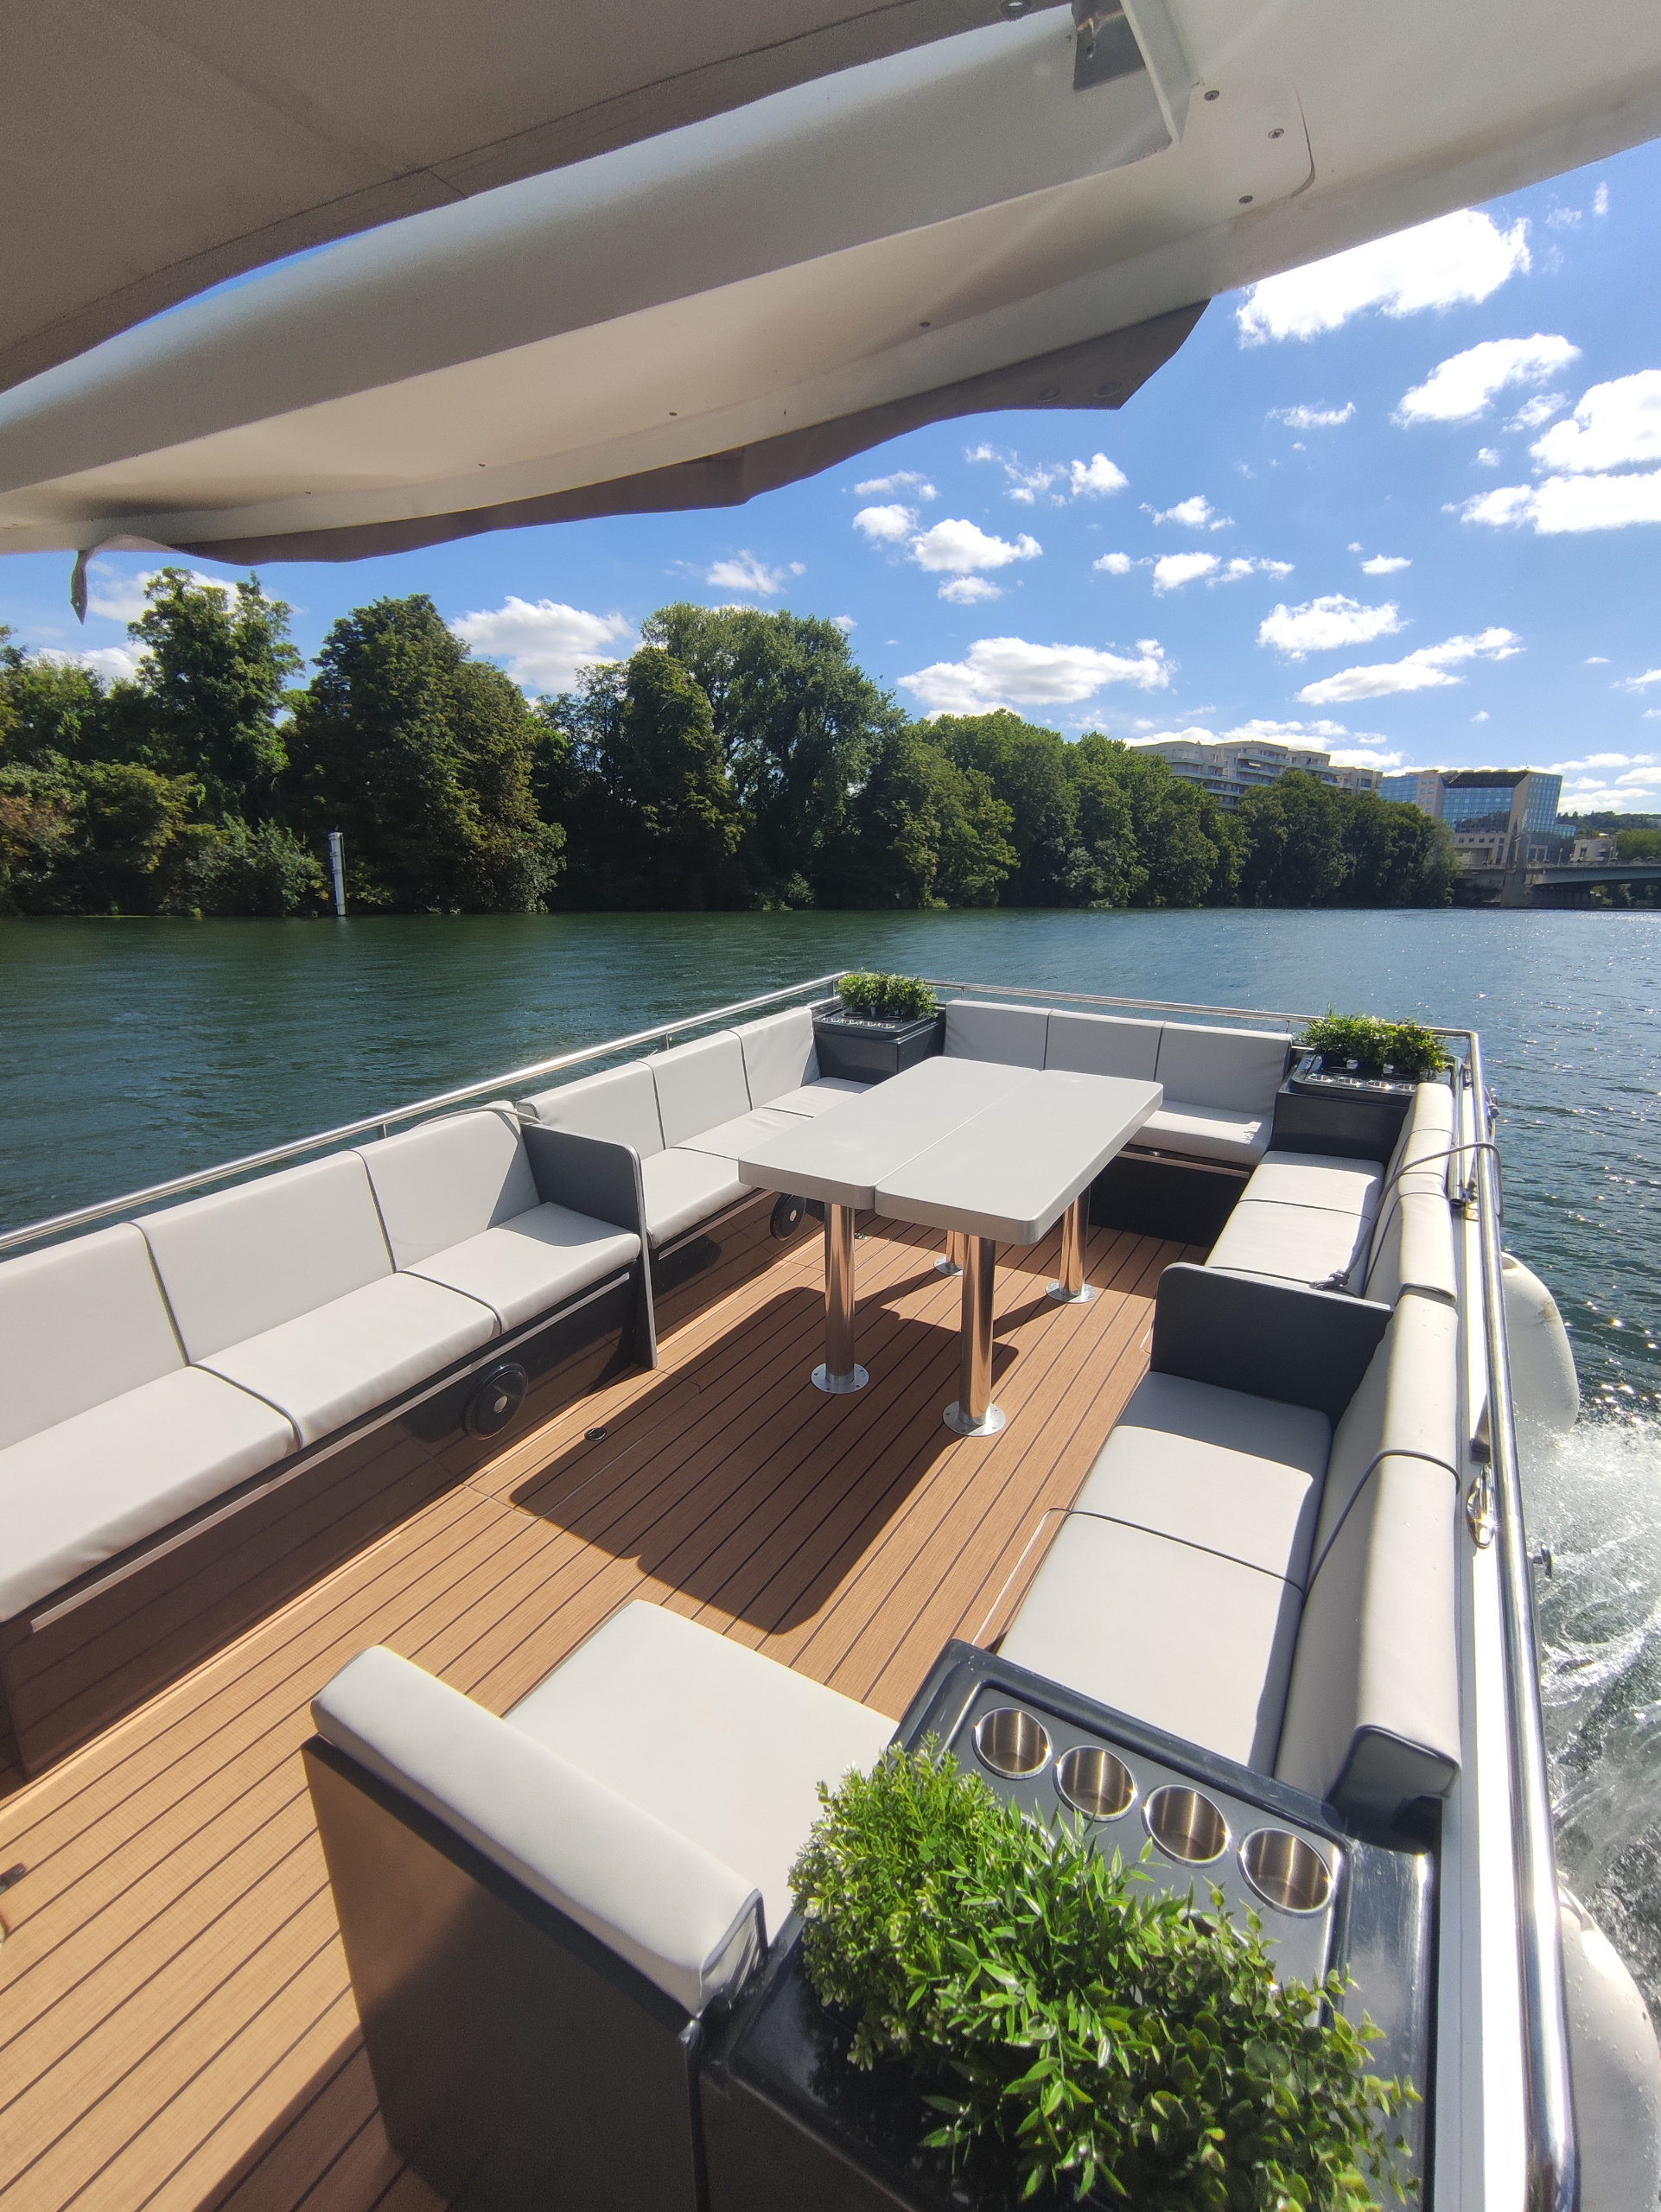 Deck view 2 Riverlounge Luxury Pontoon Boat - Private Boat Tour in Paris - Boat in Paris